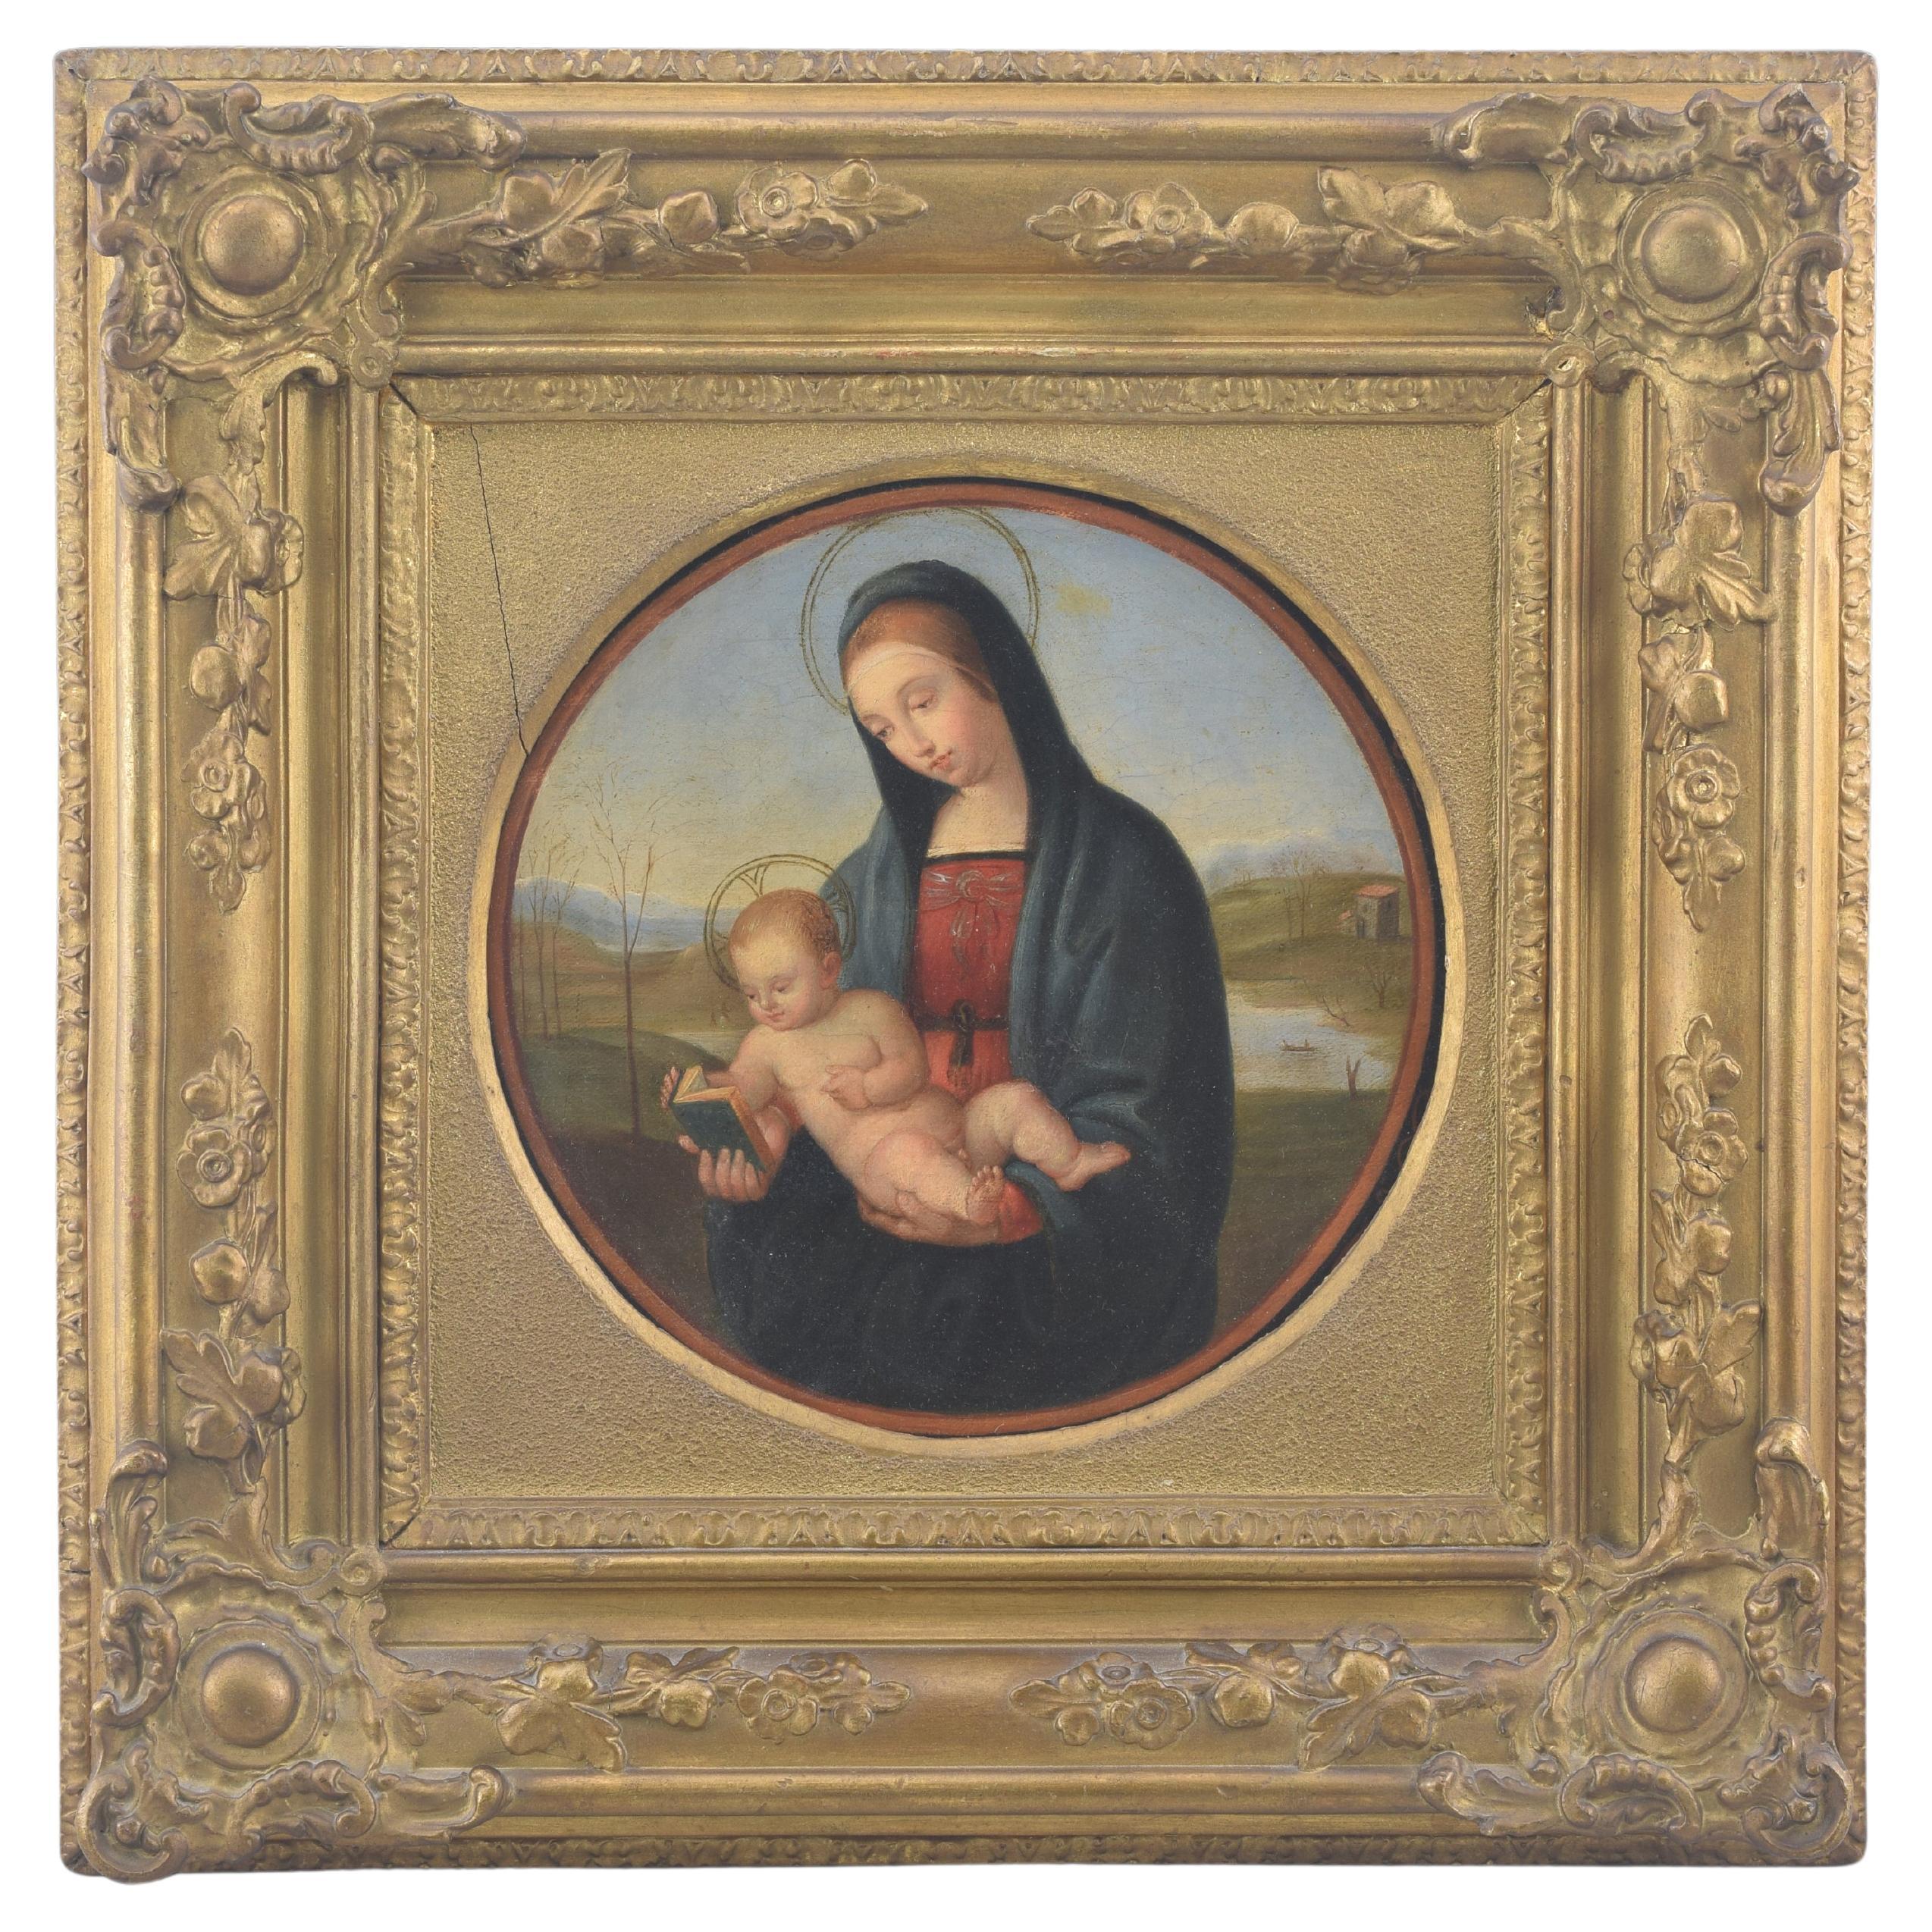 Madonna. Oil on canvas. 19th century, after Raphael Sanzio.